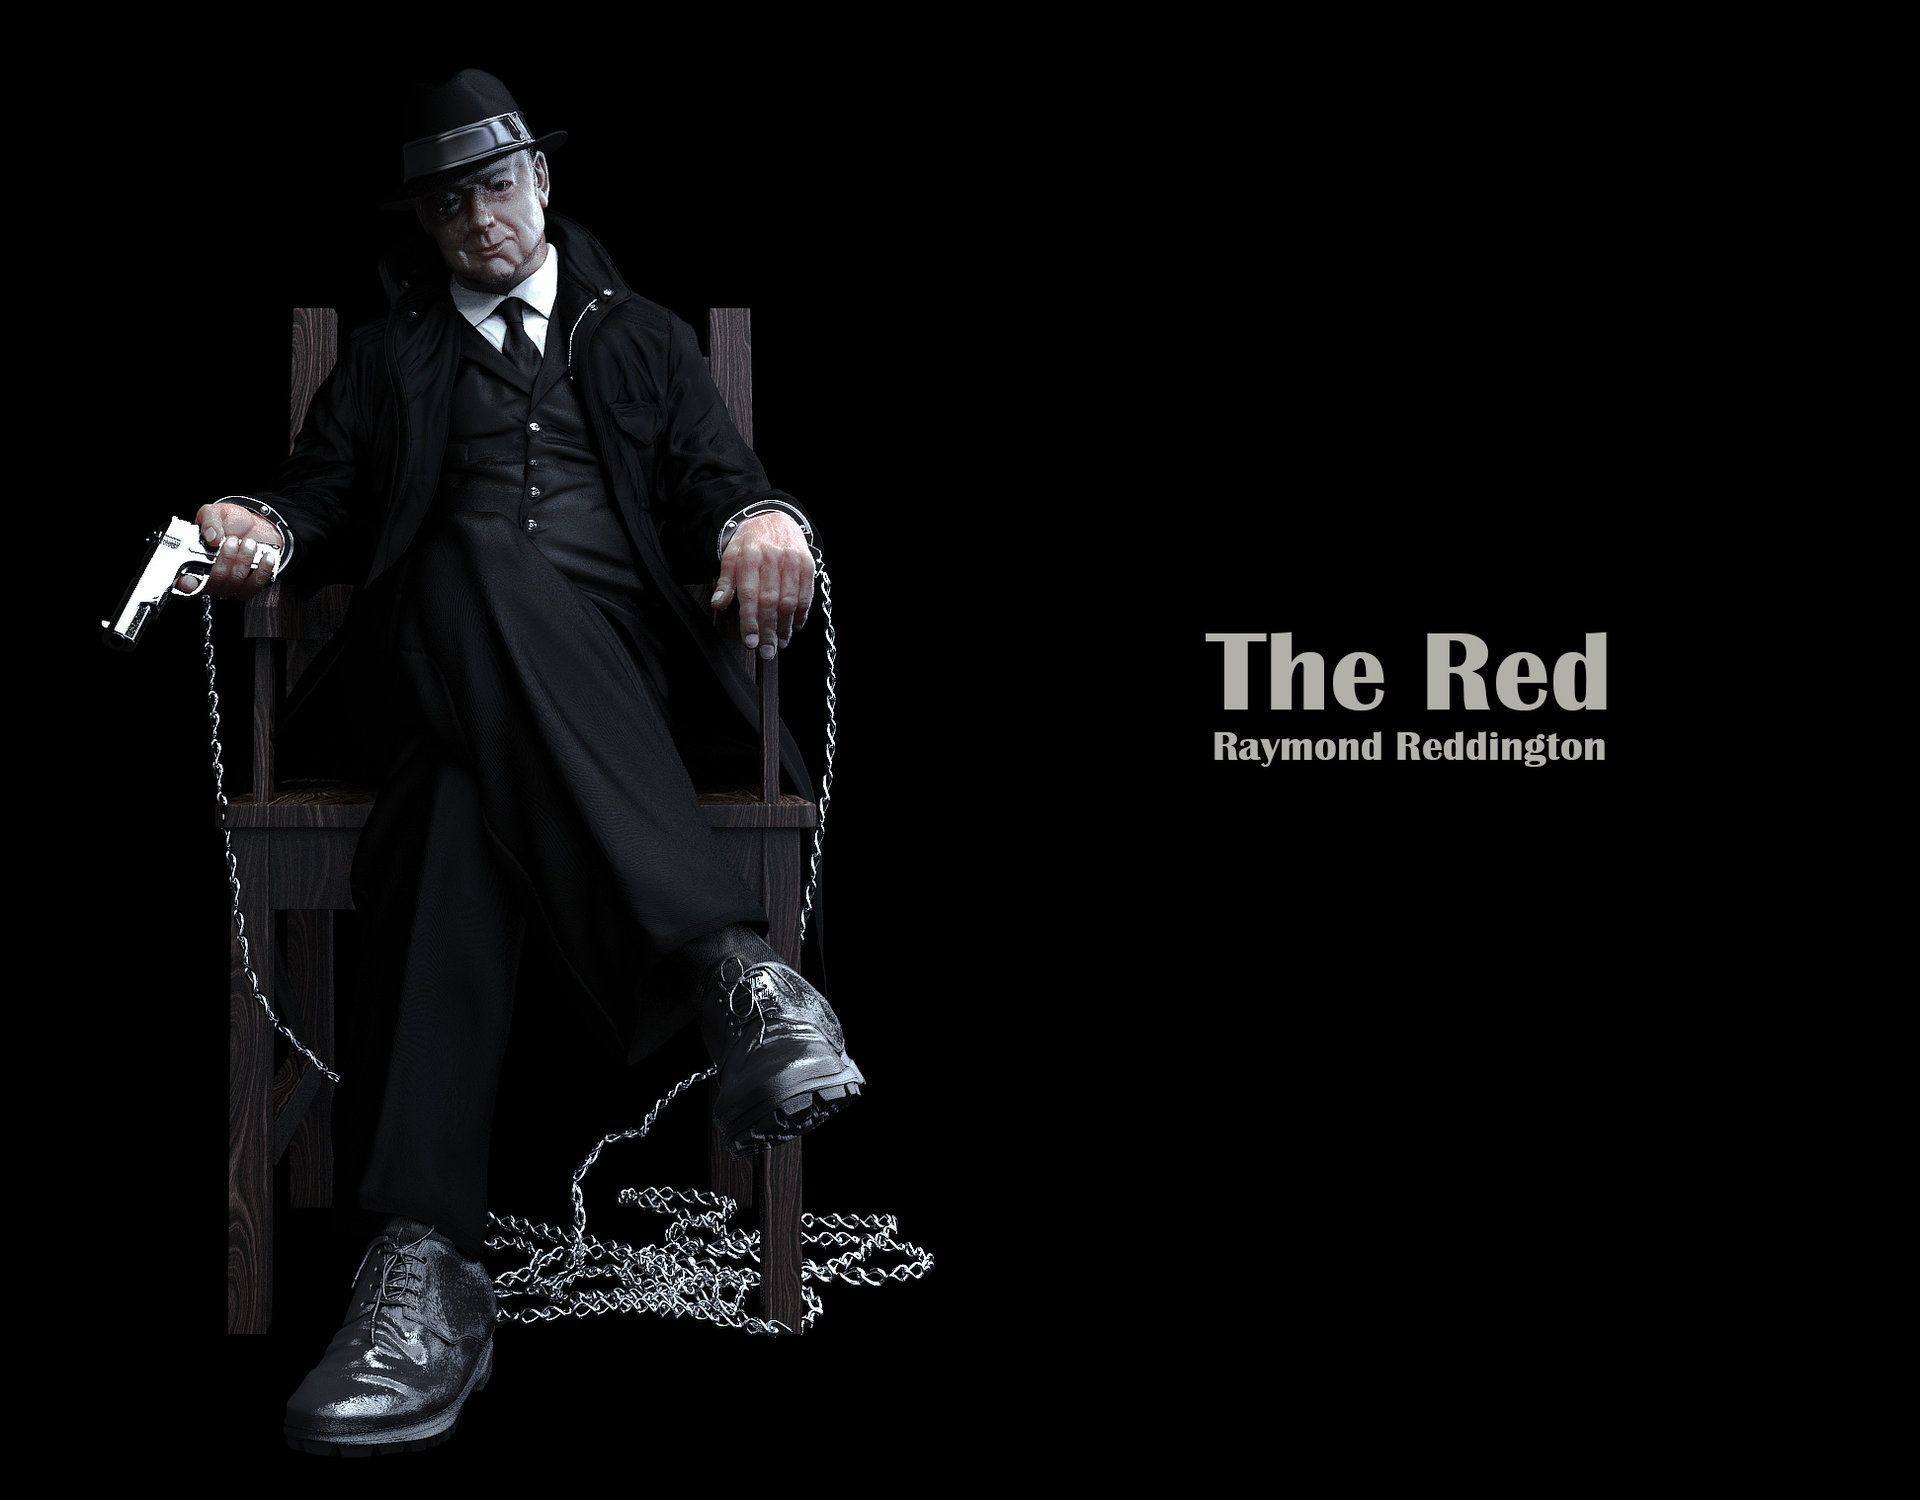 The Red-Raymond Reddington Textured Version, Li Yin